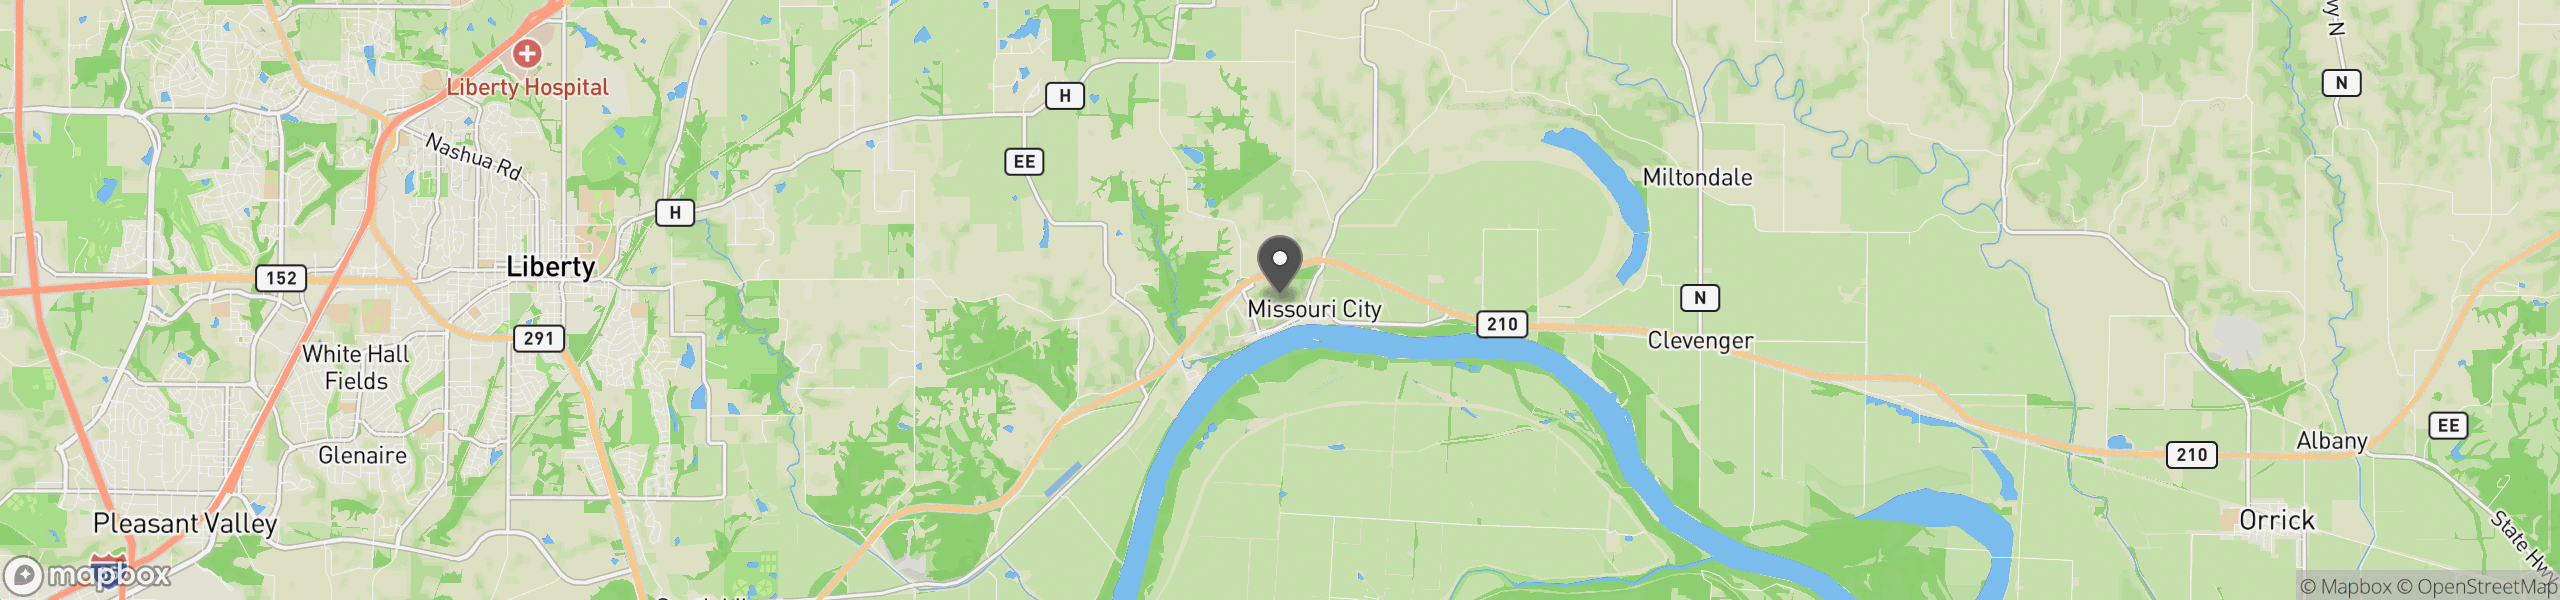 Missouri City, MO